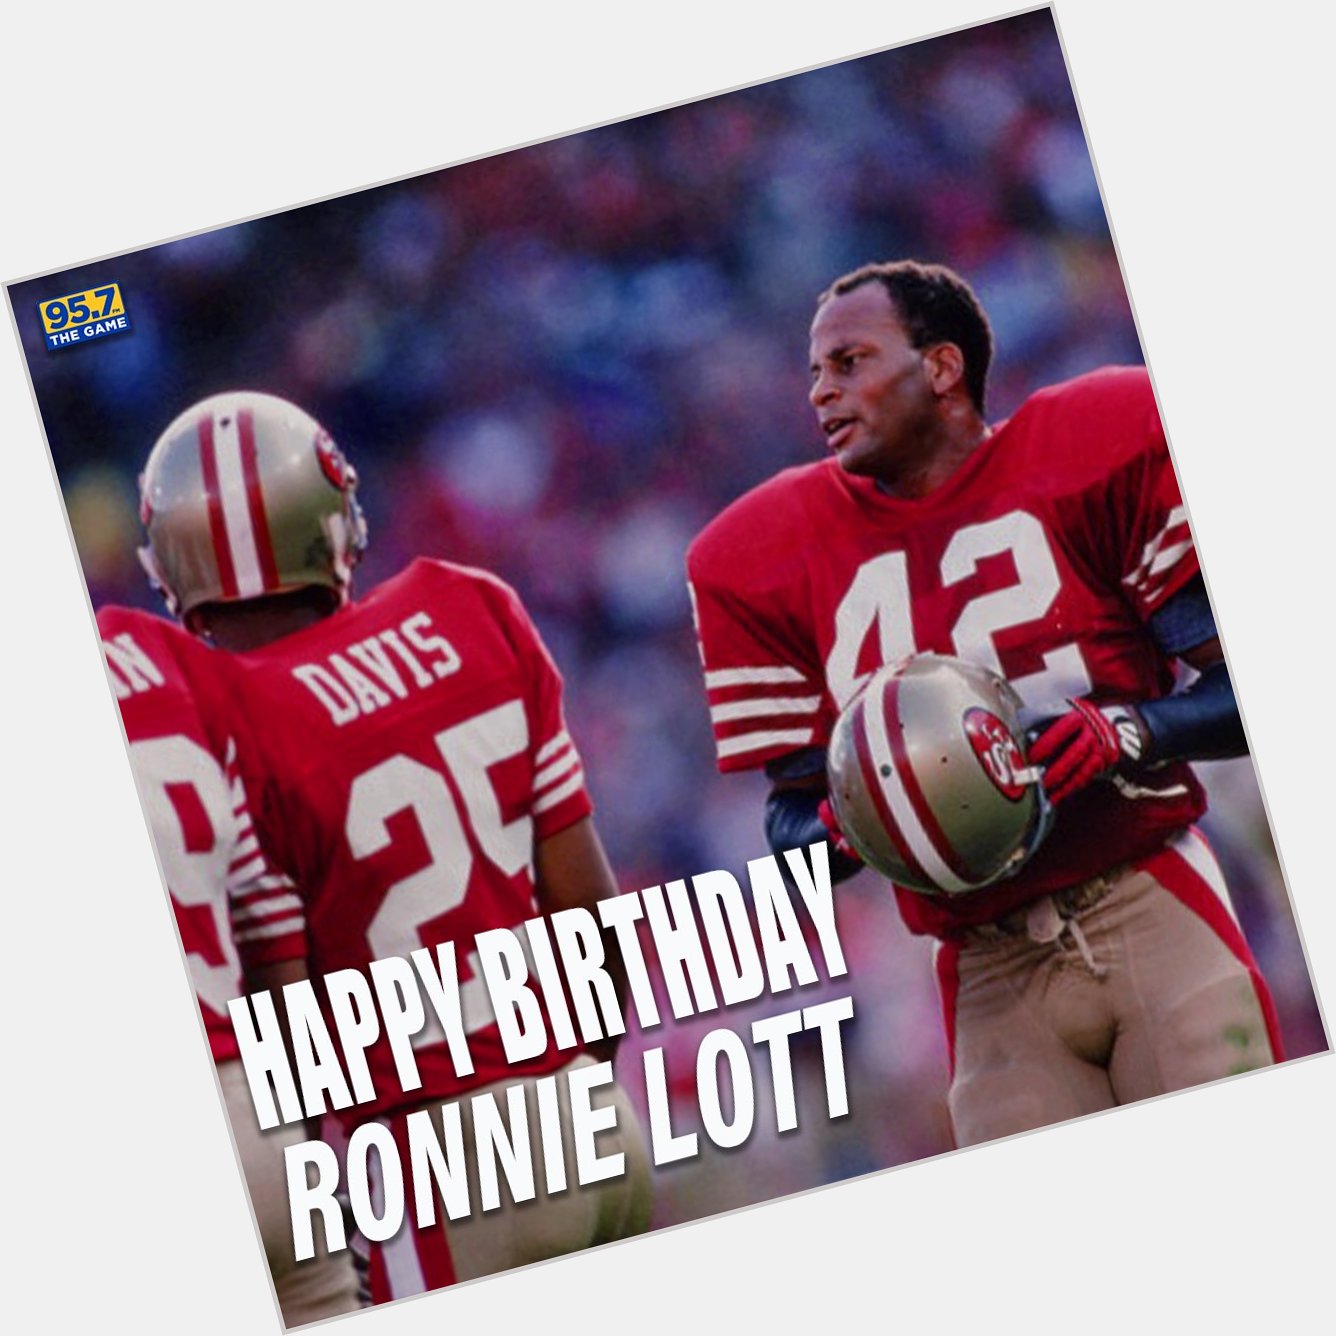 Happy 61st Birthday to the legendary Ronnie Lott! 